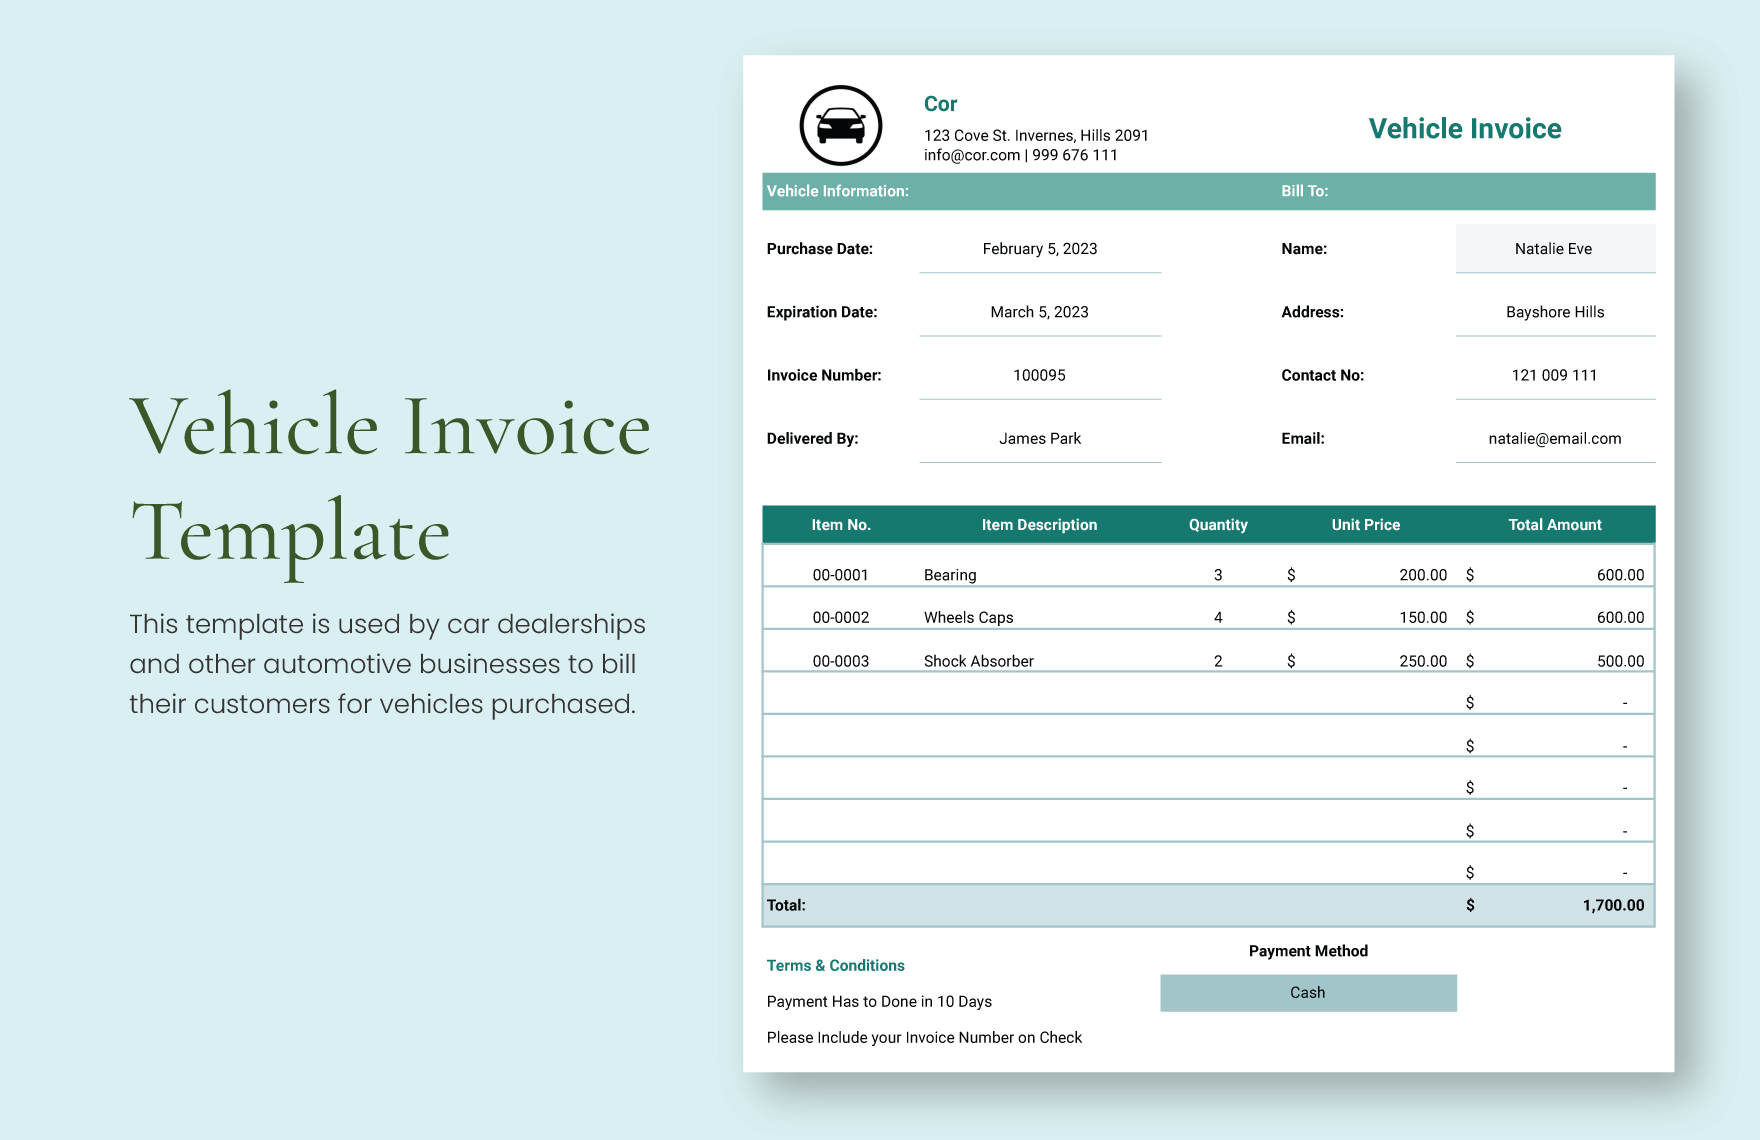 Vehicle Invoice Template